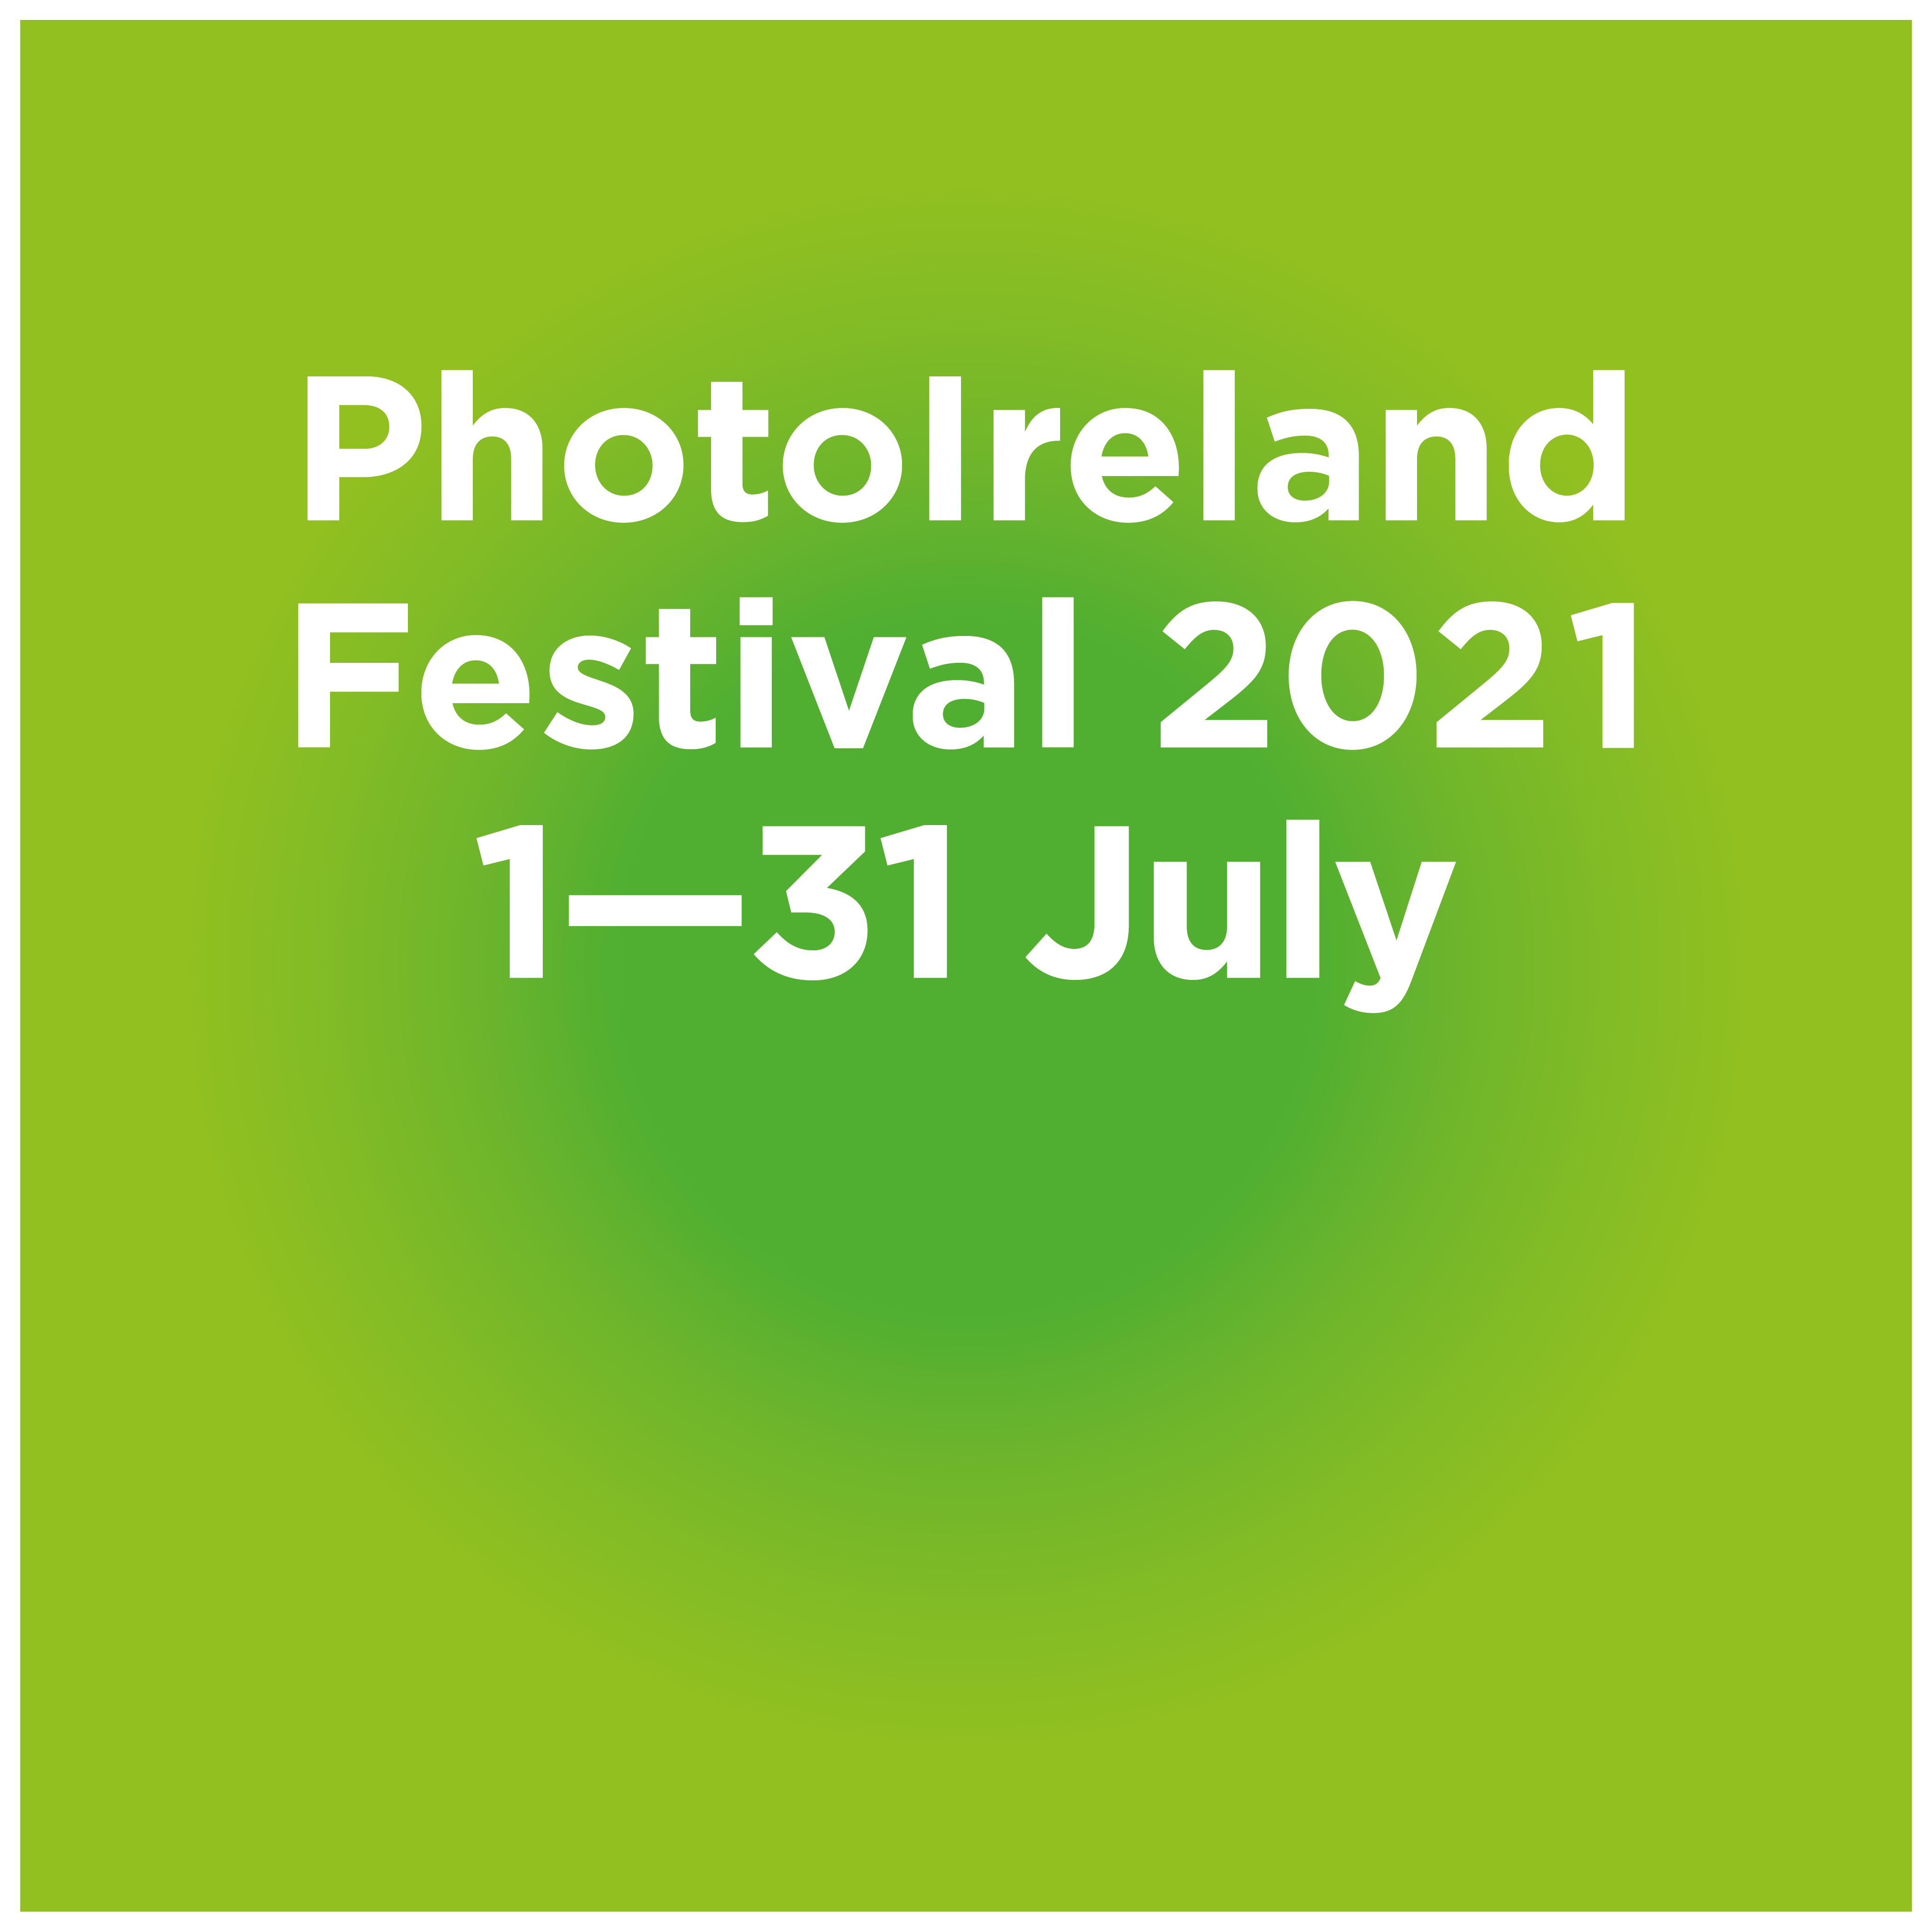 PhotoIreland Festival 2021